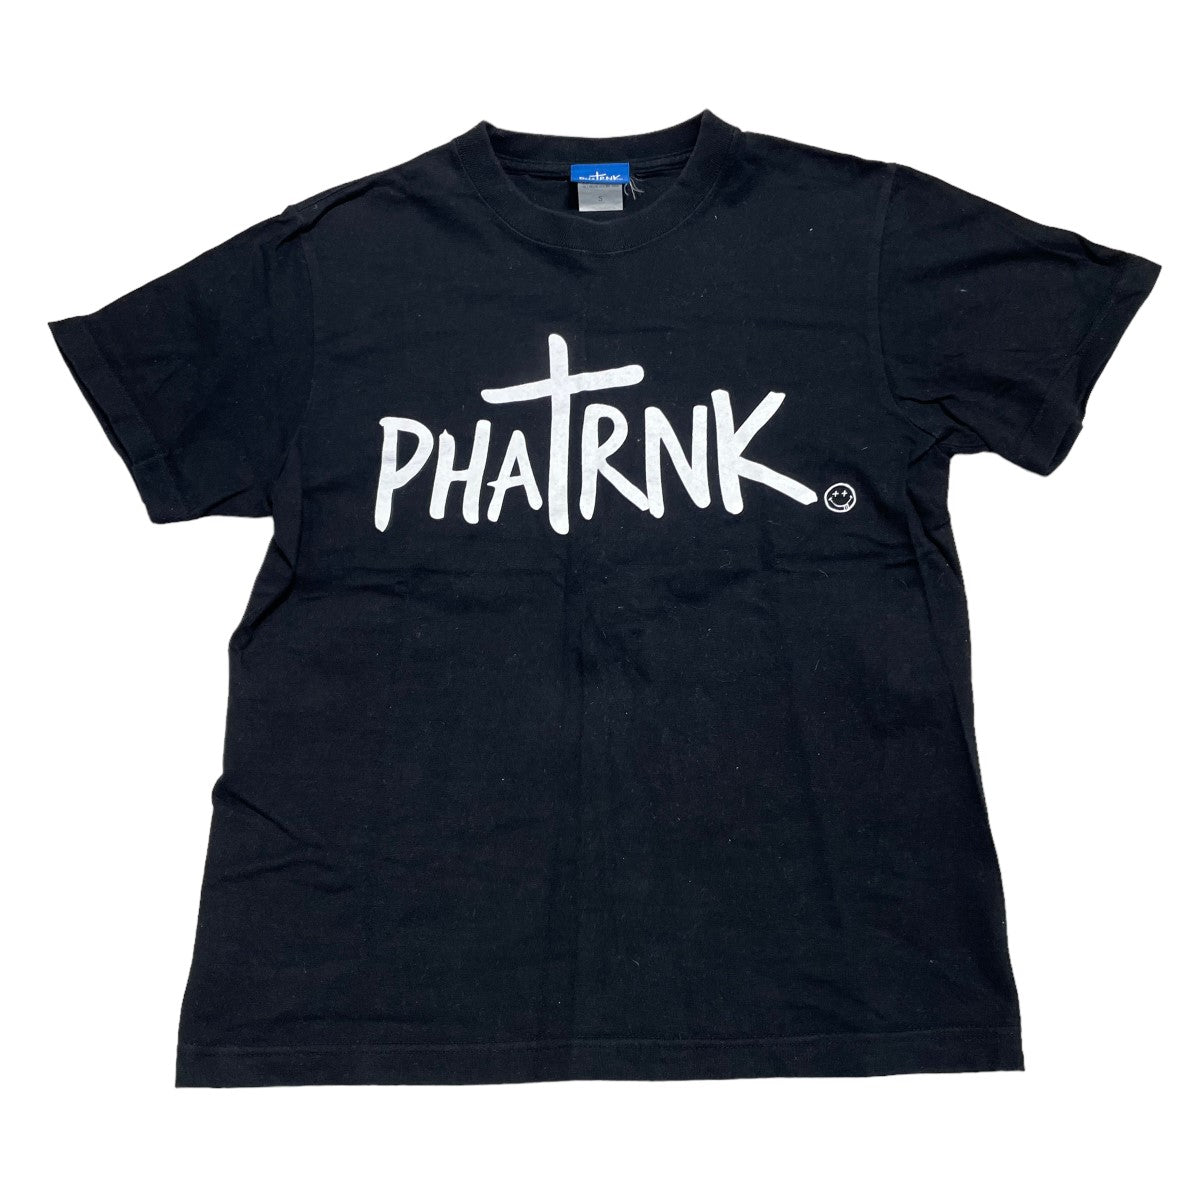 PHATRNK ファットランク 両面 プリント ビック ロゴ Tシャツ - トップス